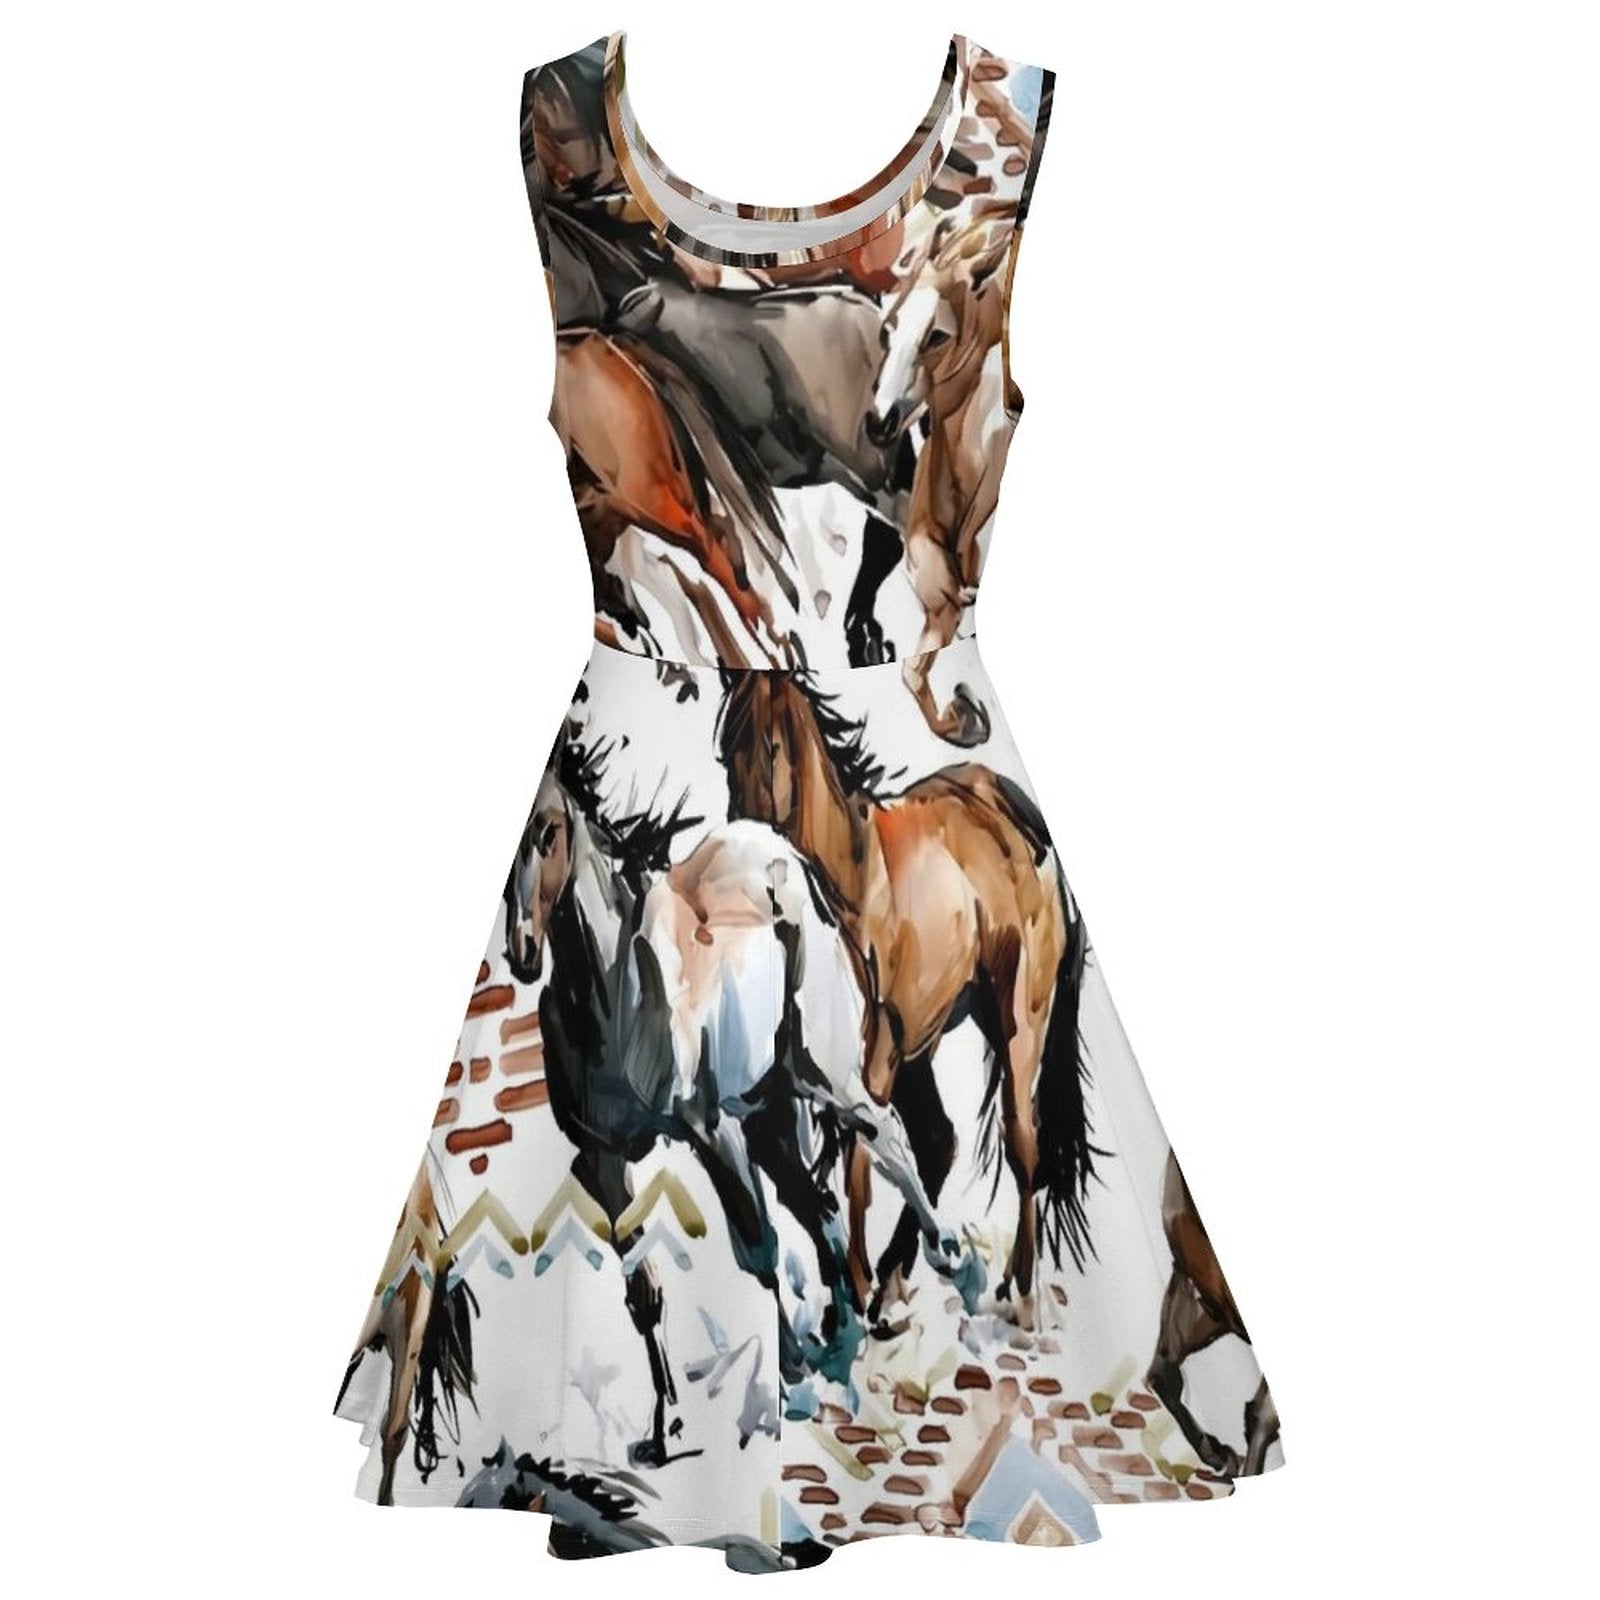 Horse riding dress